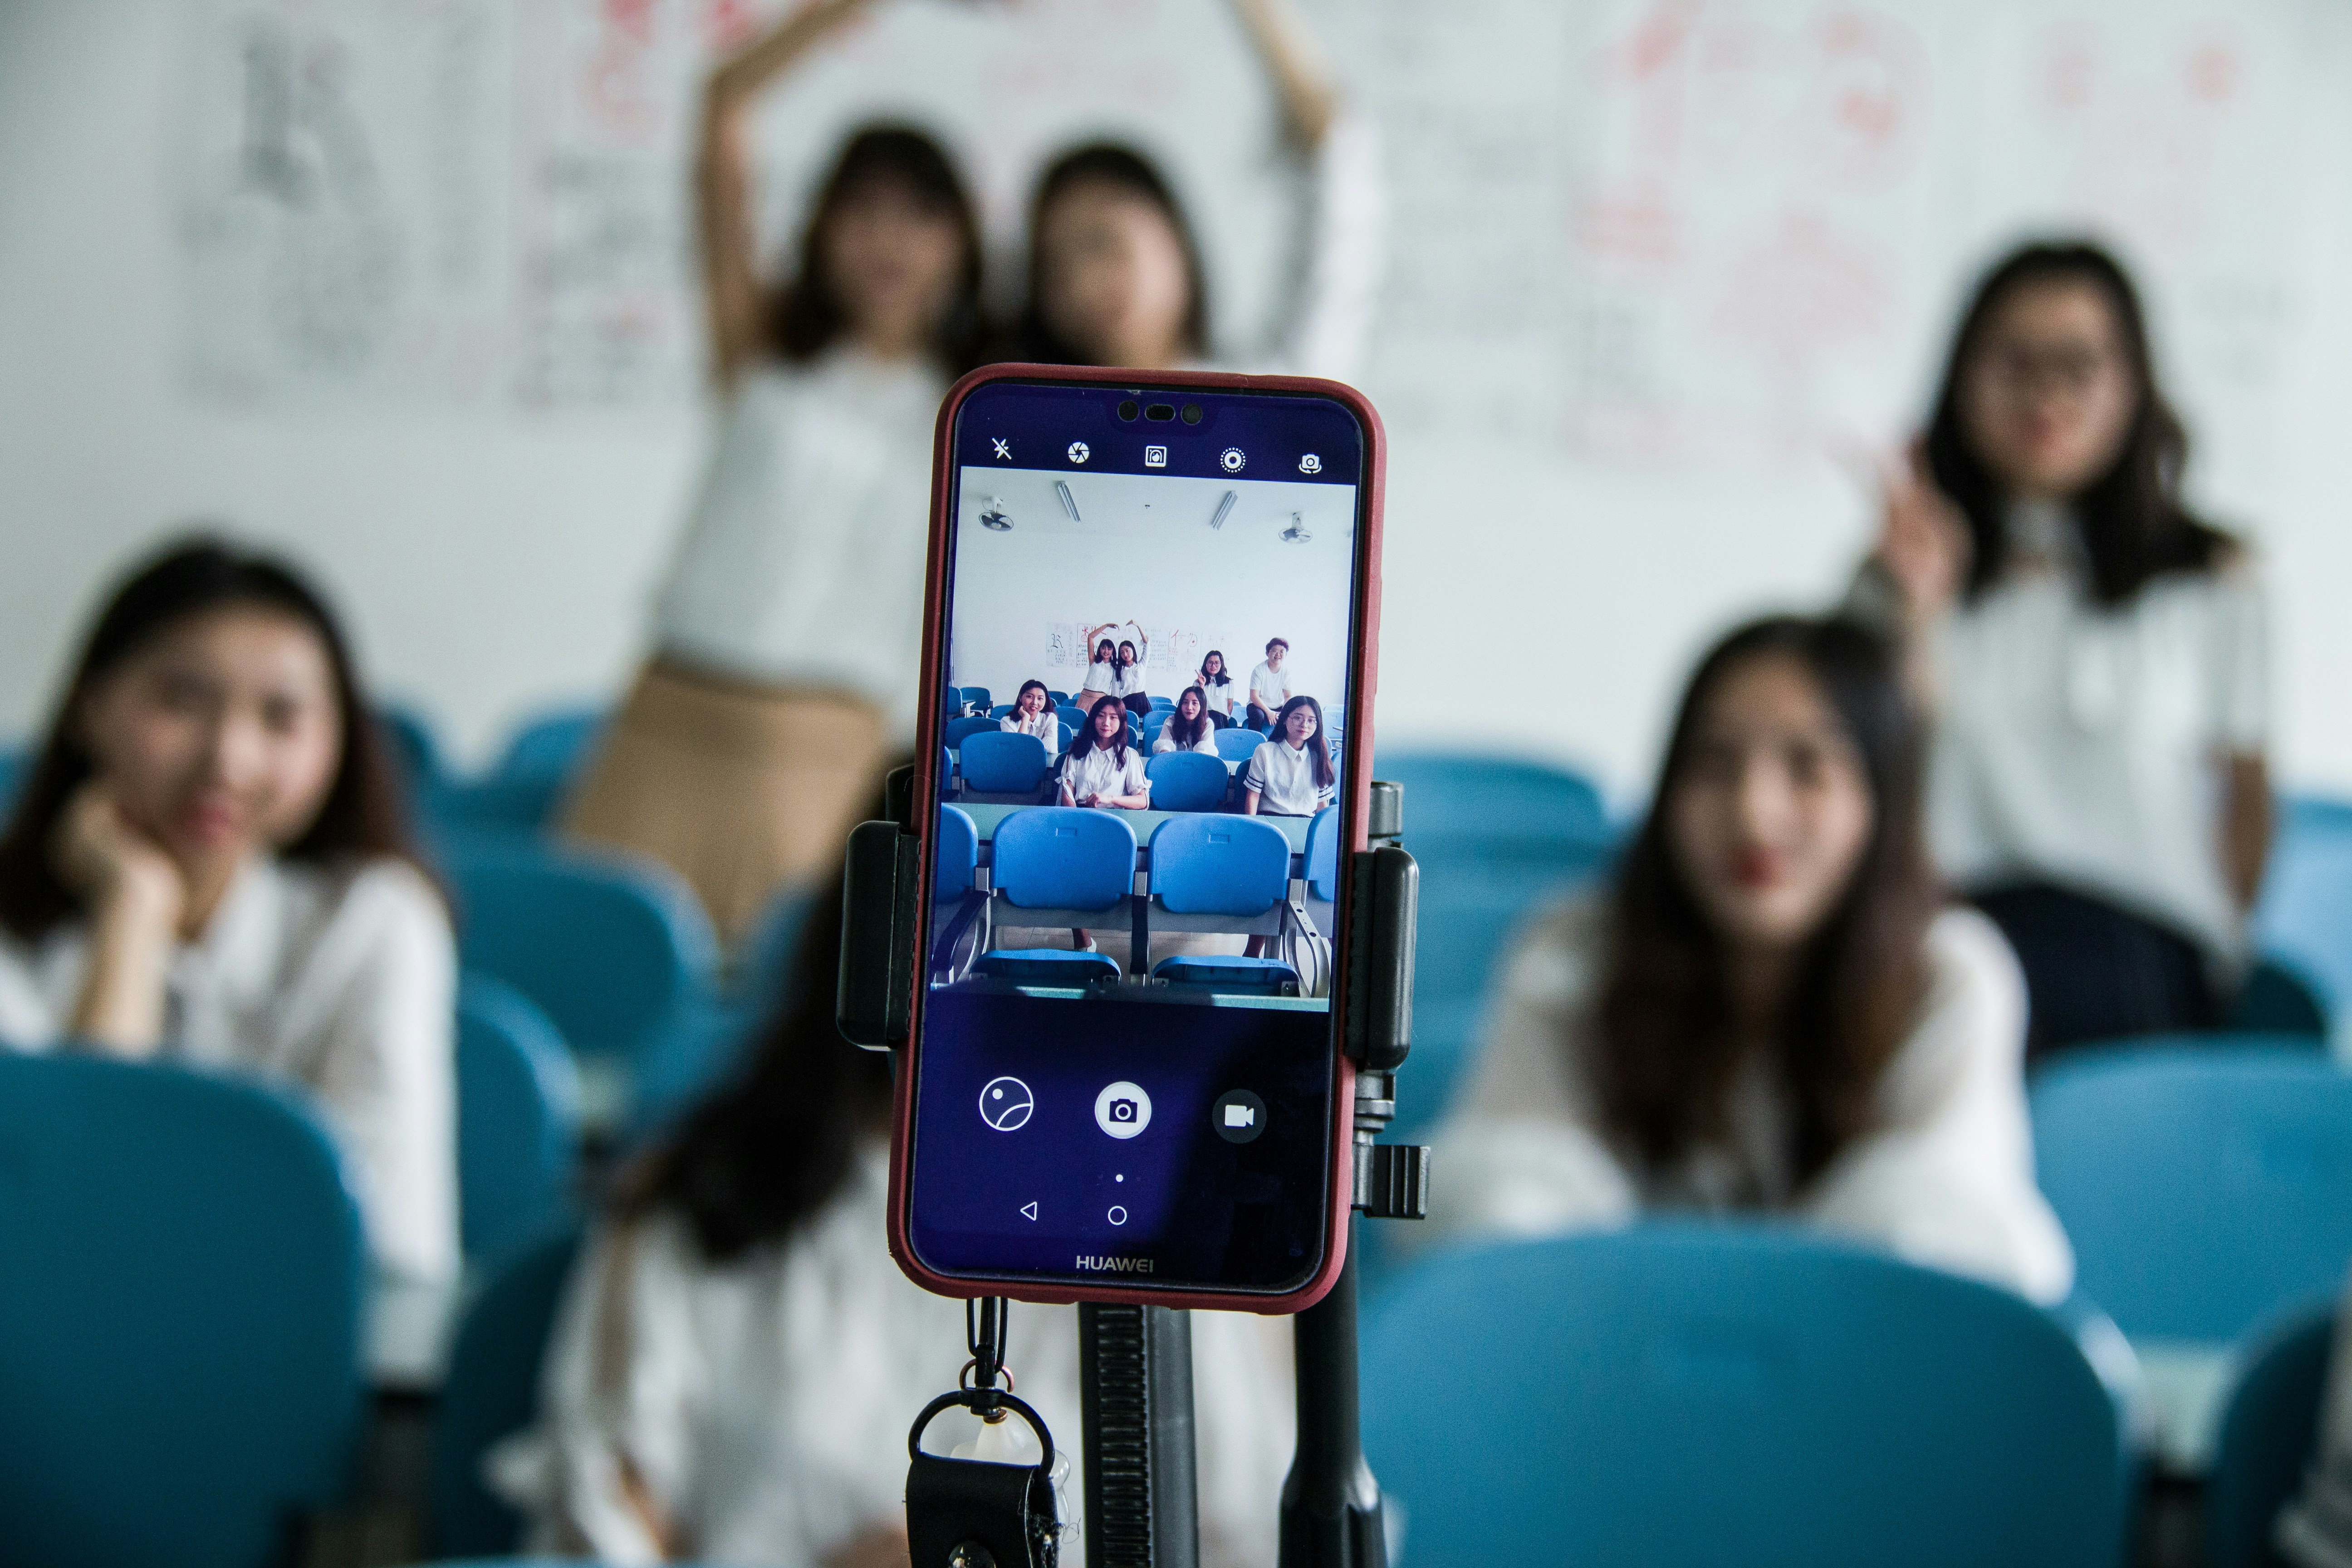 School children in a classroom using a phone